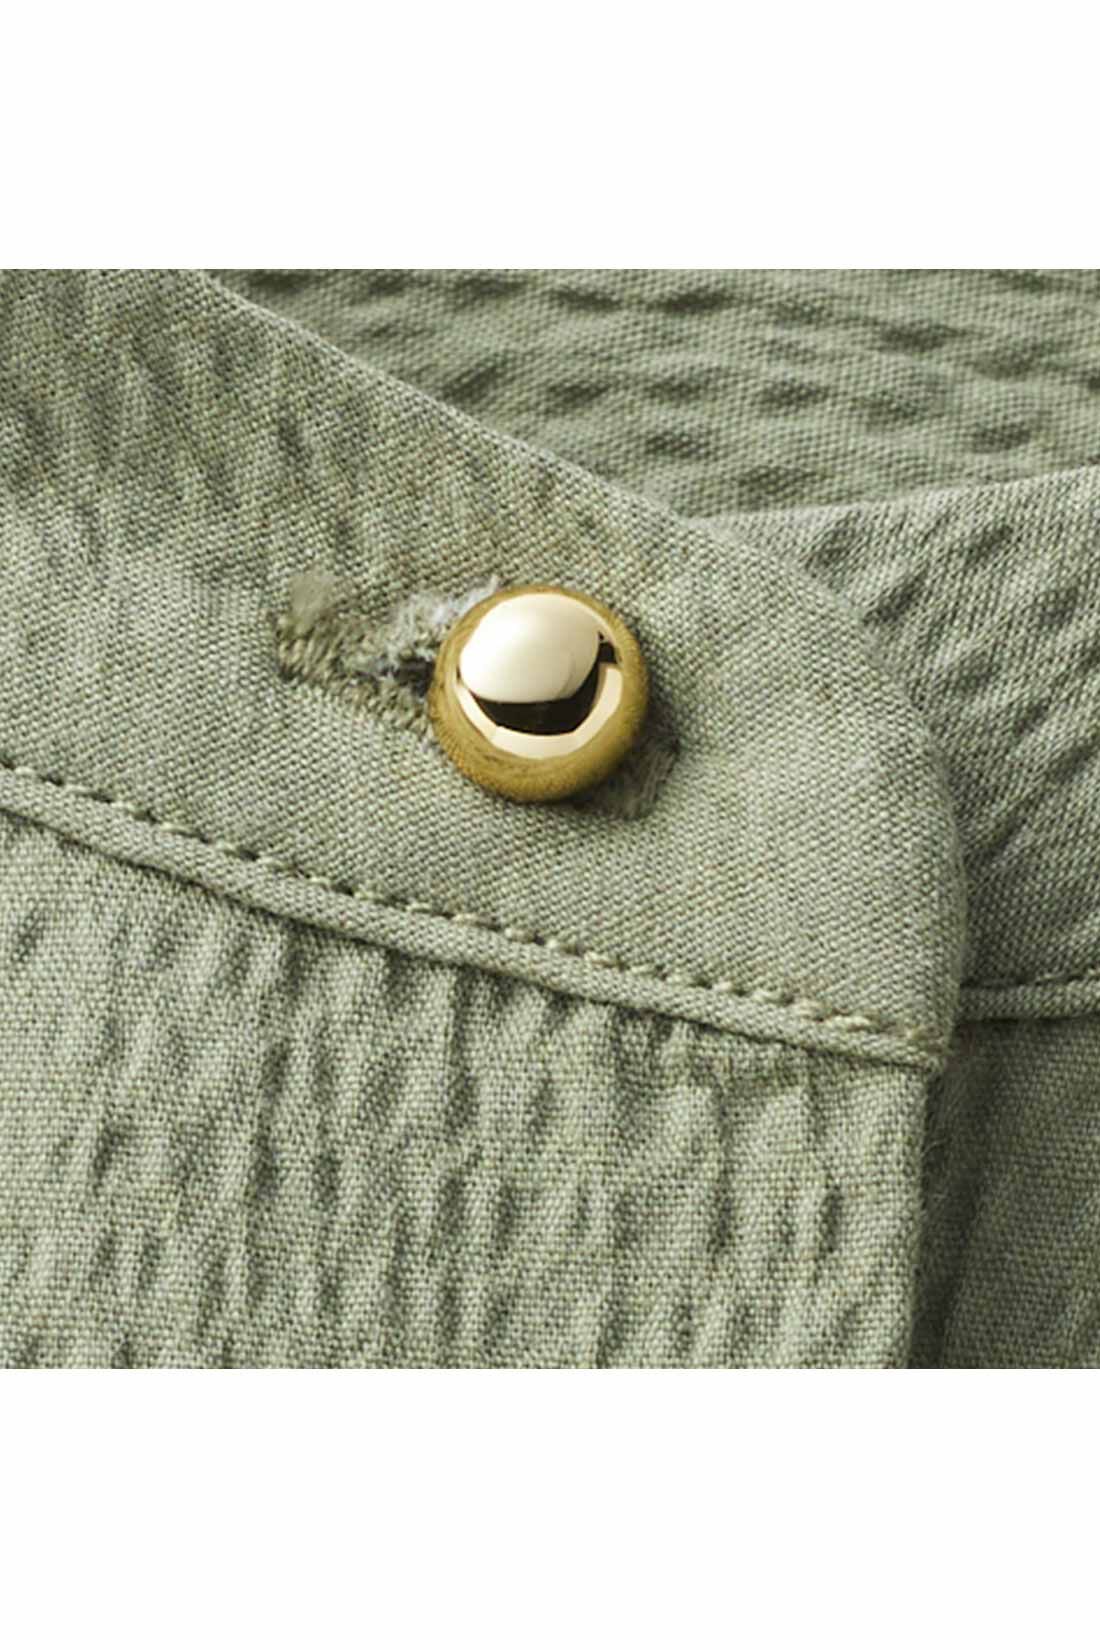 IEDIT[イディット]　バンドカラーとゴールドボタンで着映えする サッカー素材のシャツワンピース|上品な比翼ボタン仕立て。一番上のゴールドボタンでほんのり華やぎをプラス。